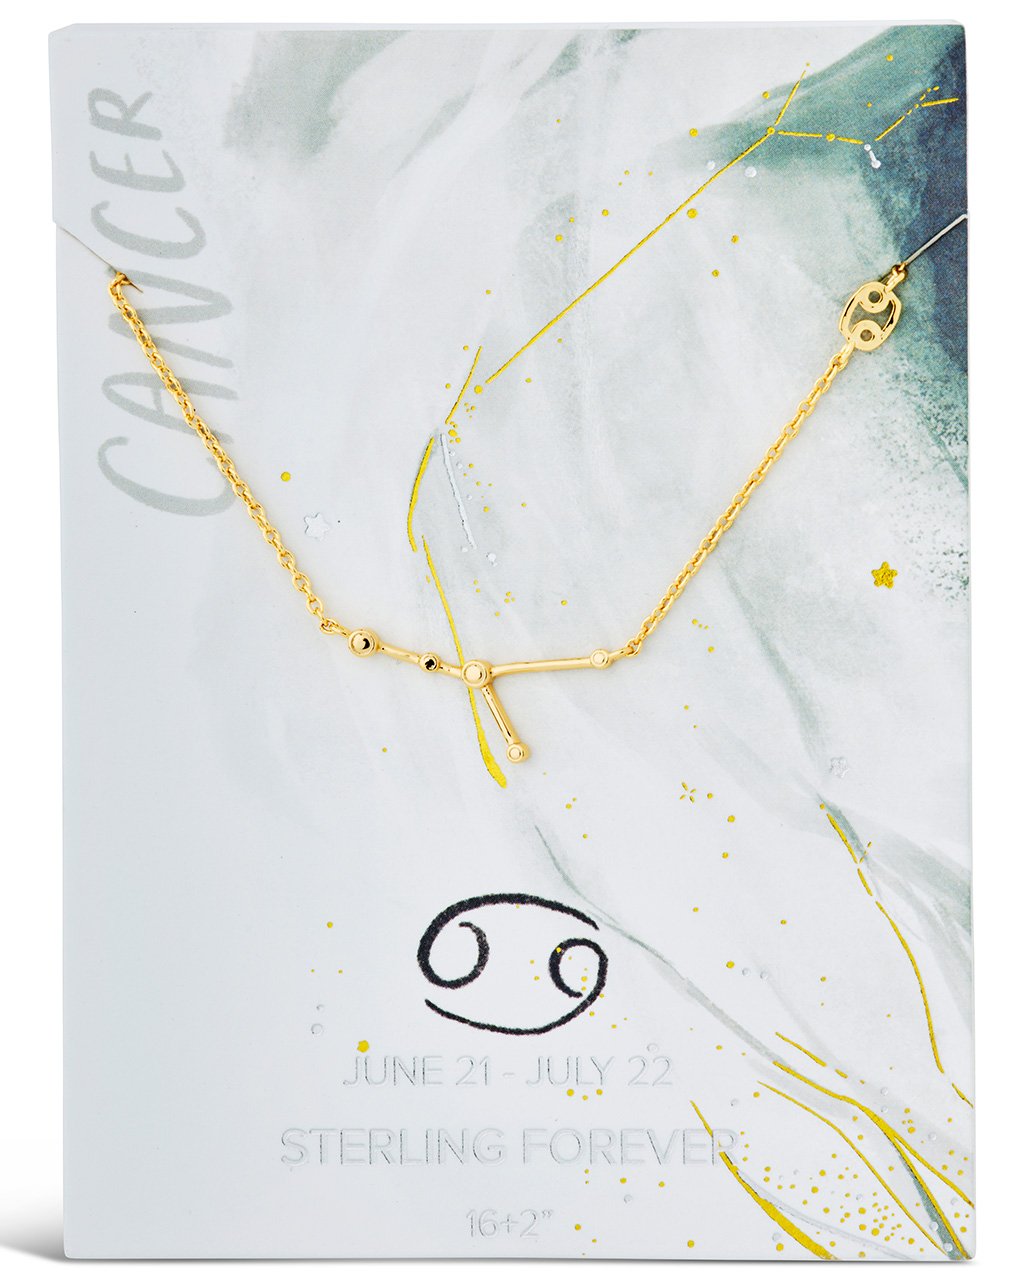 Station Constellation Pendant Necklace Necklace Sterling Forever Gold Cancer (Jun 21 - Jul 22) 